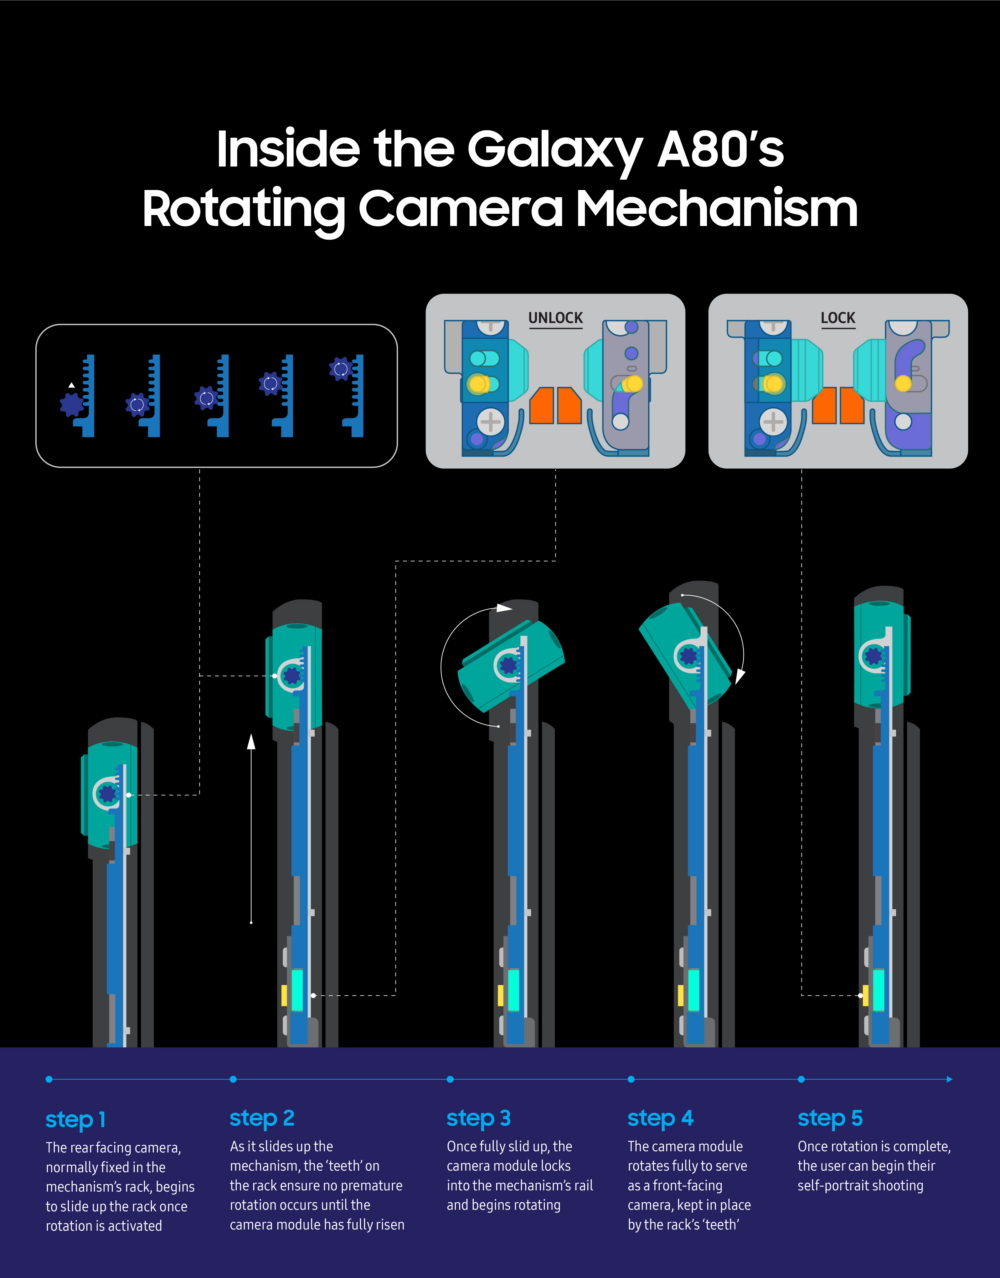 [Tech Lab Notes] Inside the Galaxy A80’s Revolutionary Rotating Camera